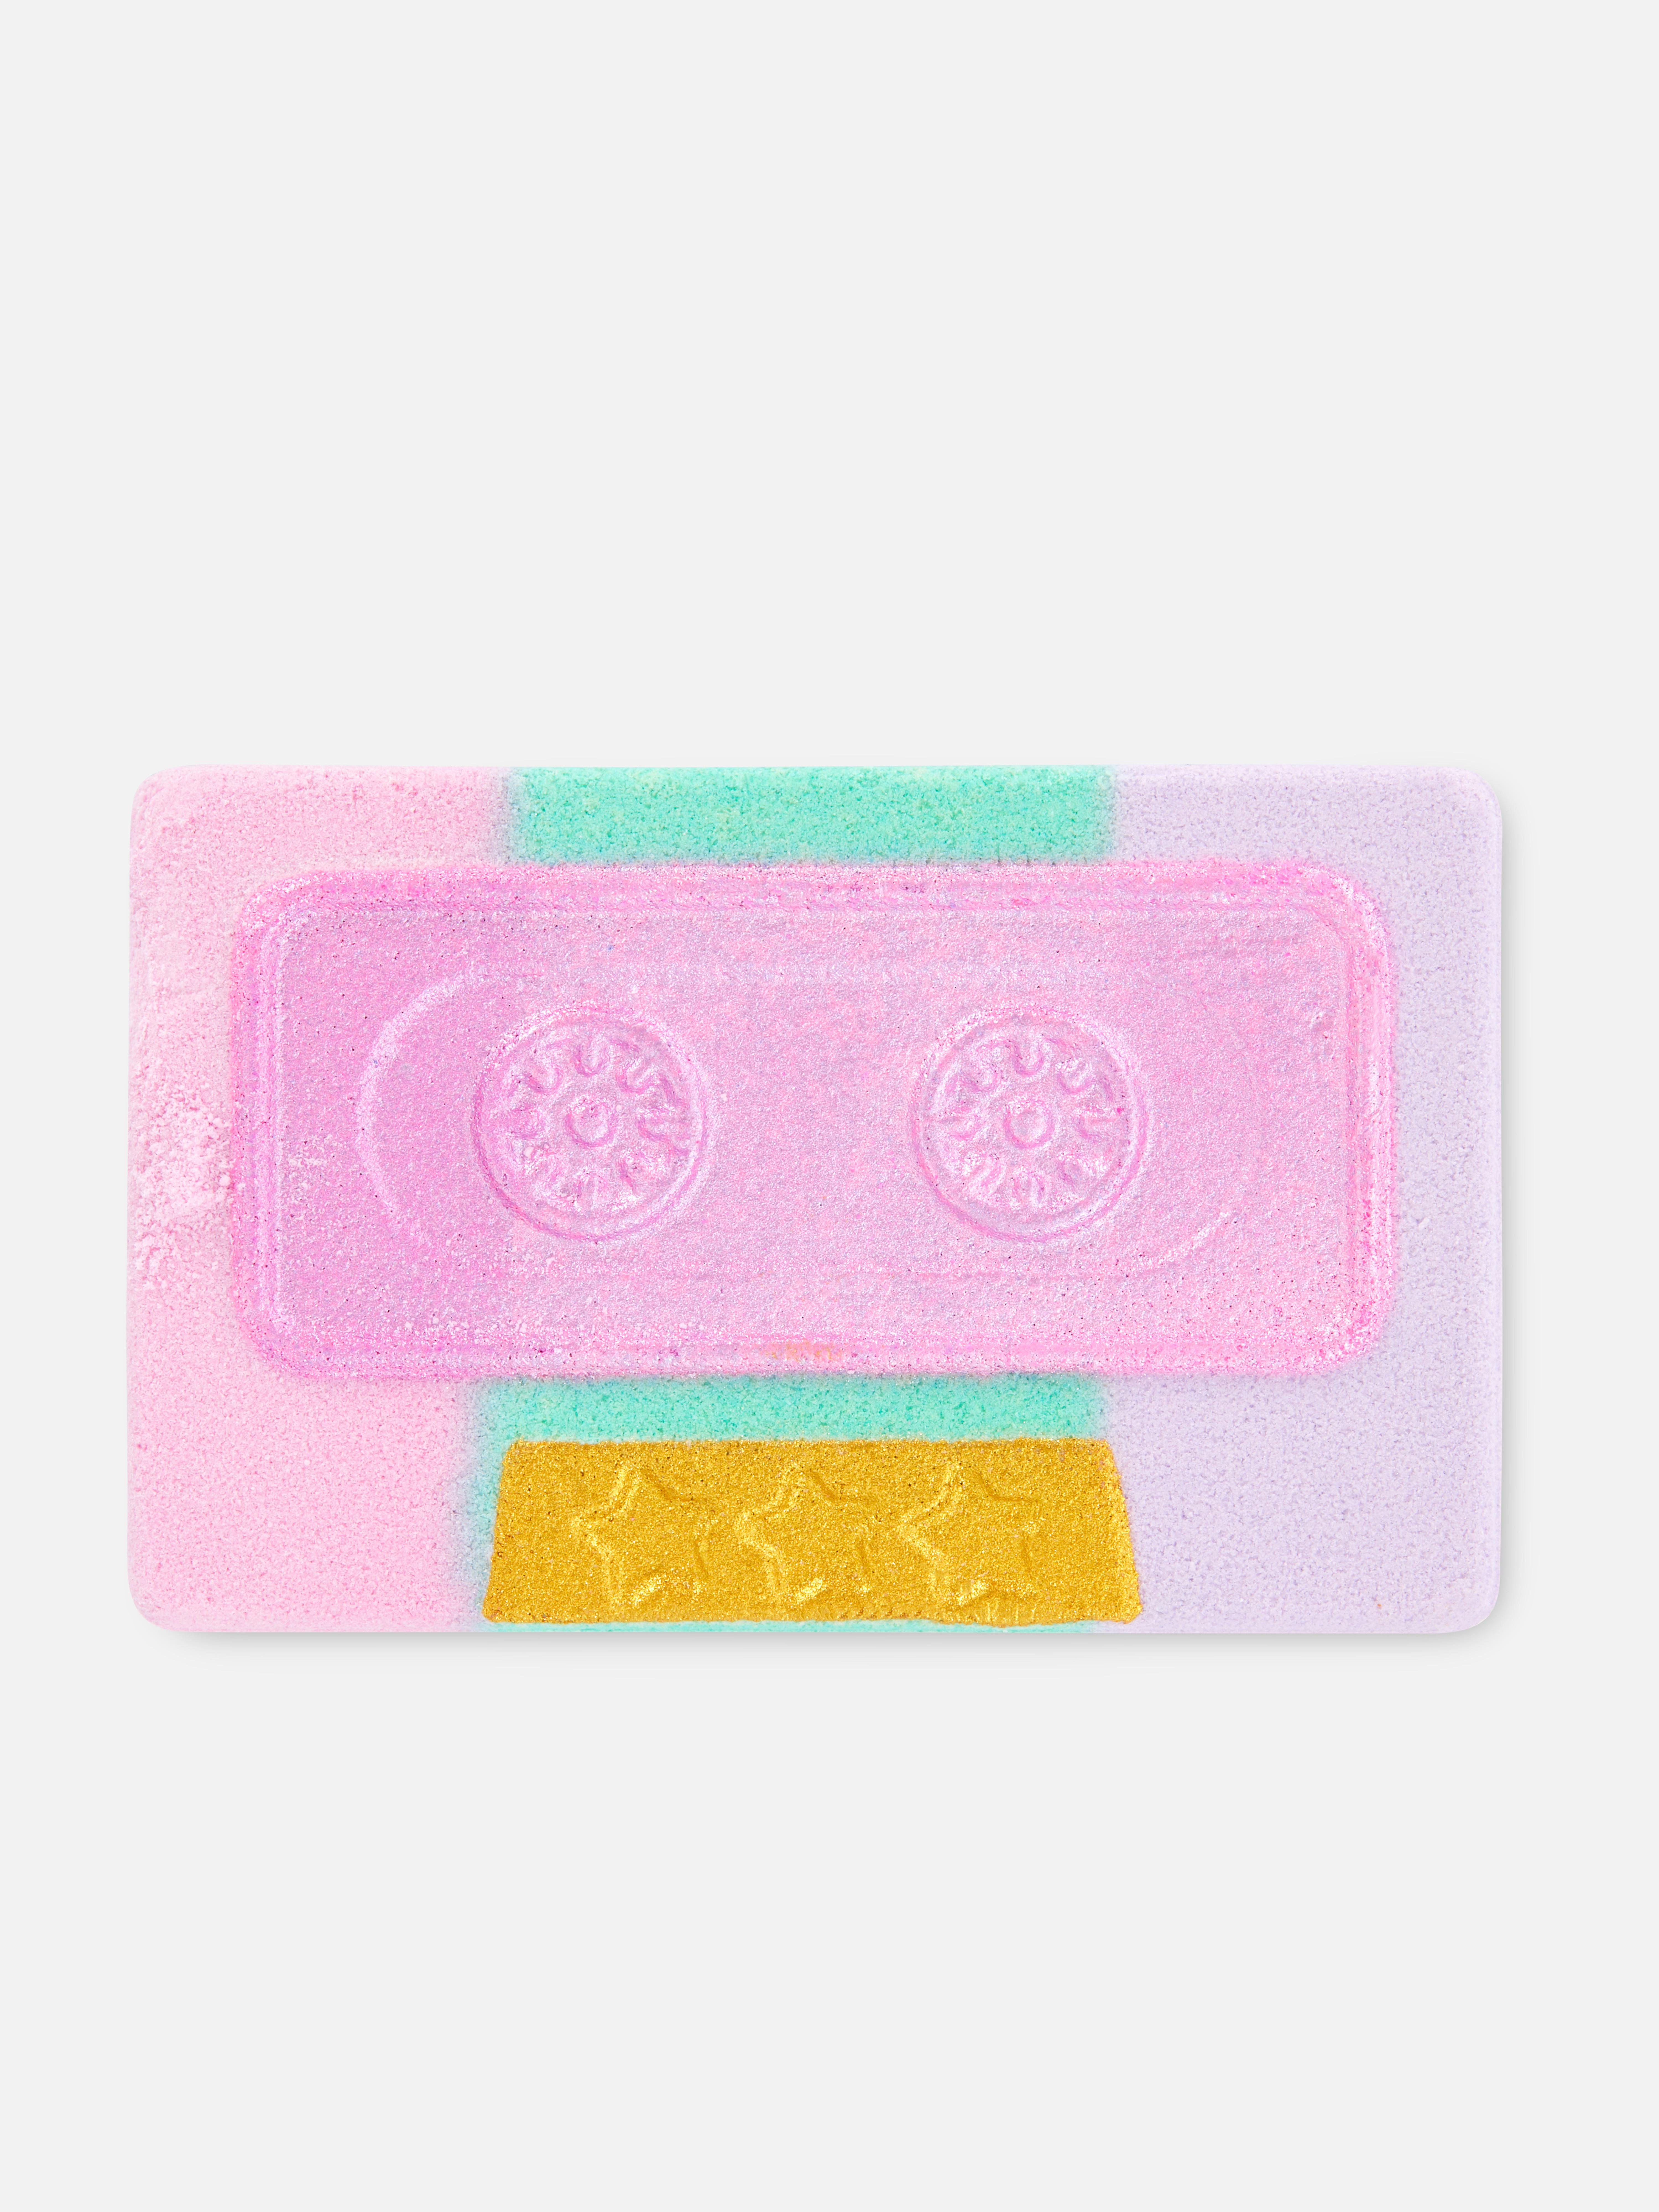 Bruisbal cassettebandje